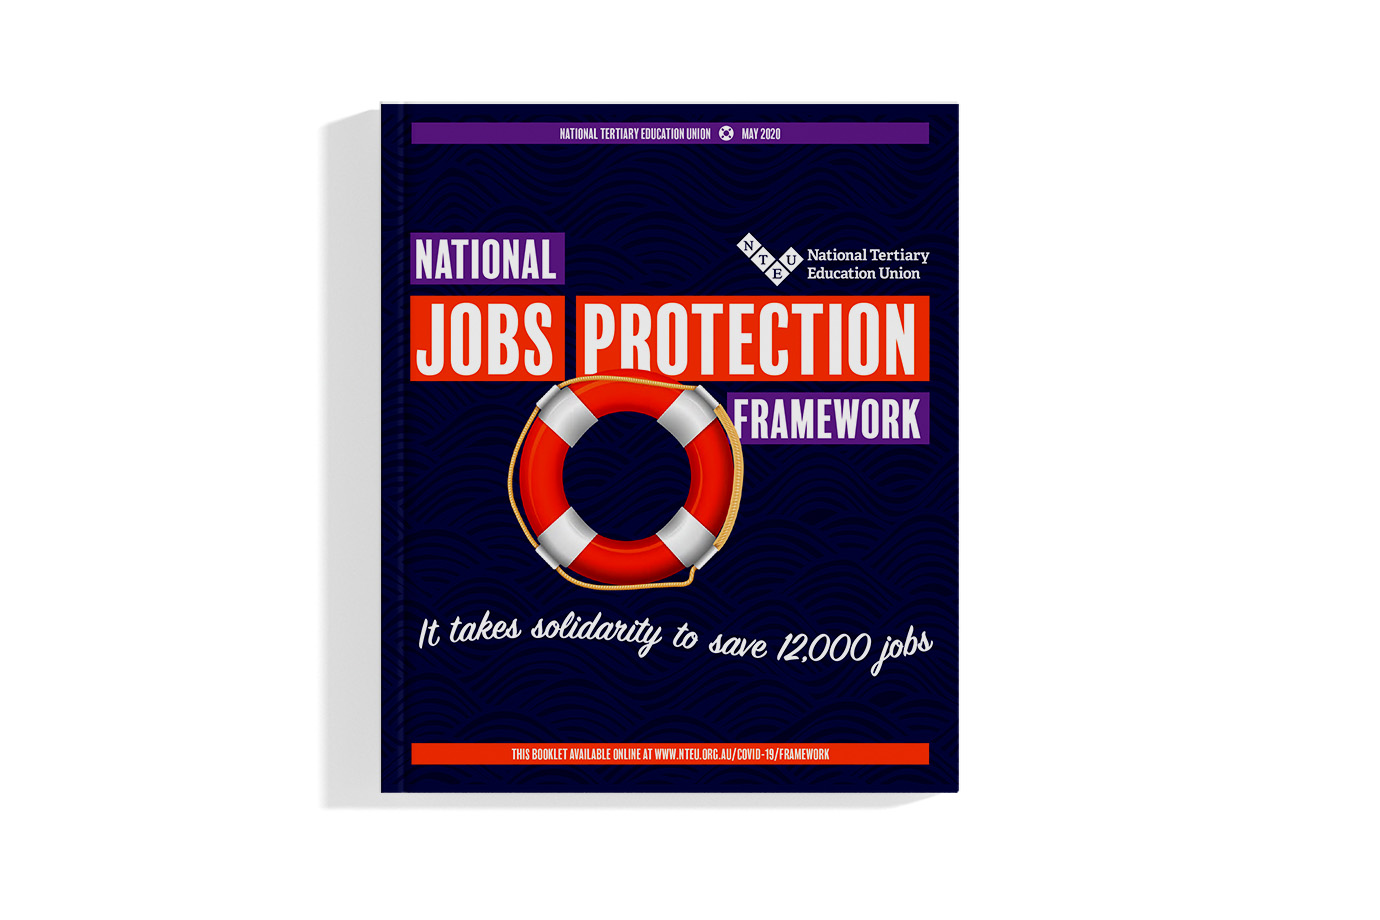 National Jobs Protection Framework booklet